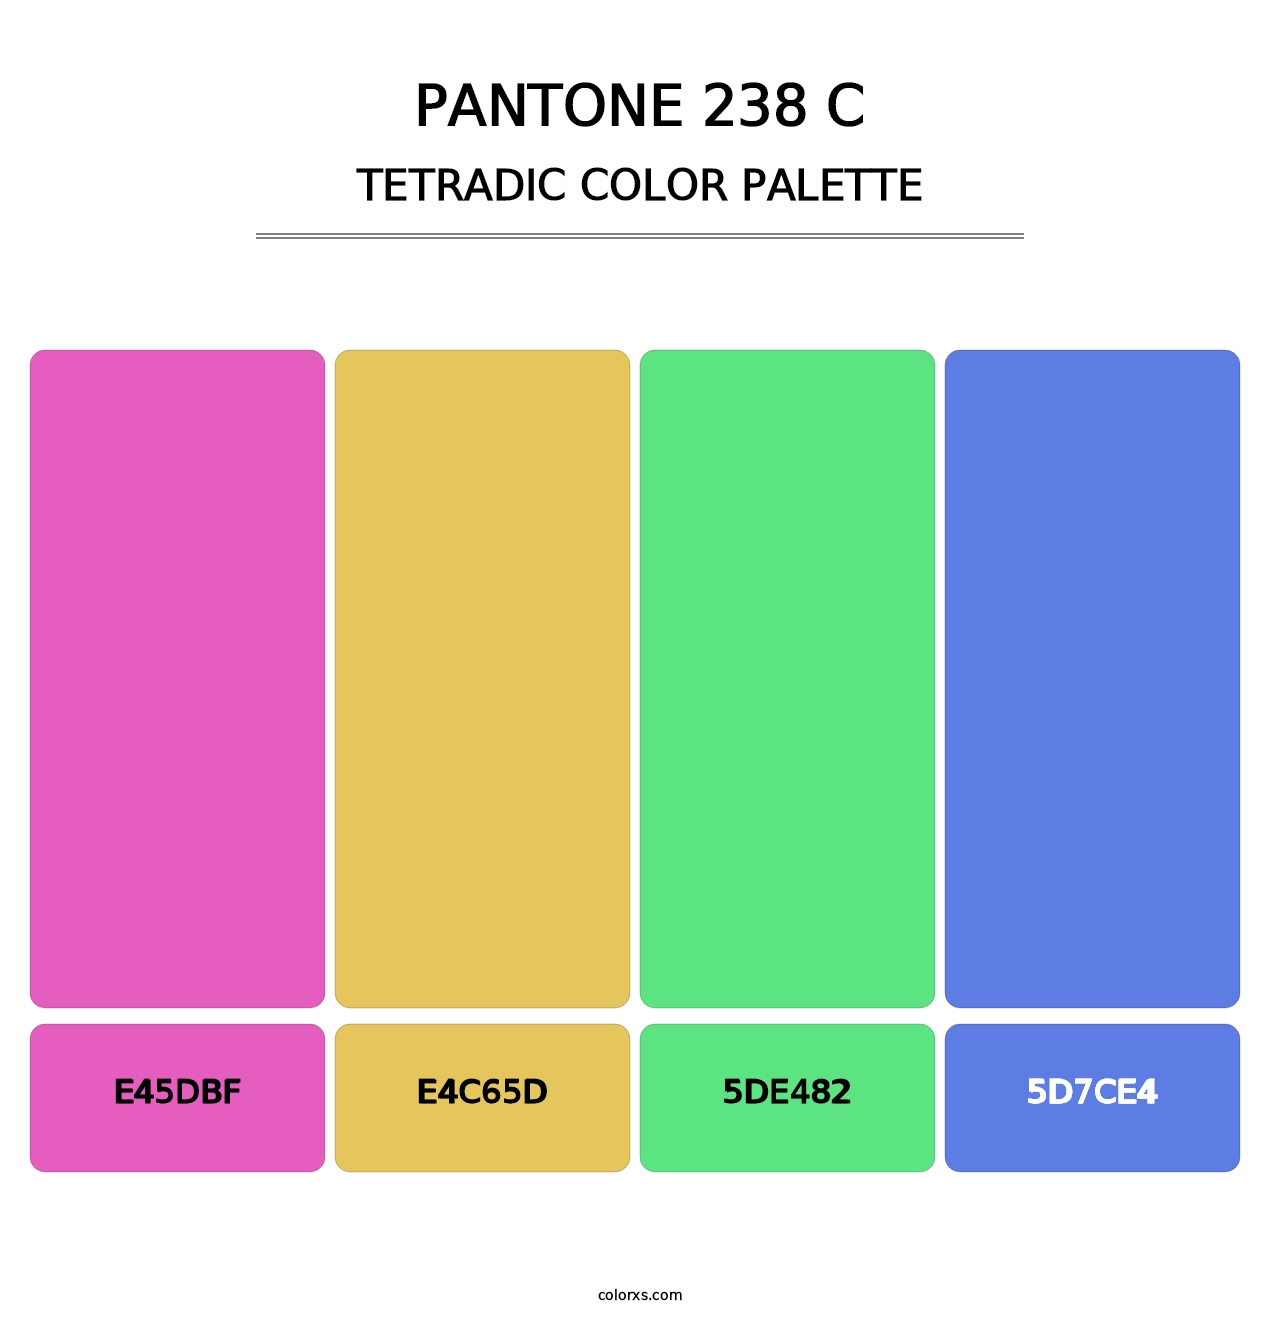 PANTONE 238 C - Tetradic Color Palette